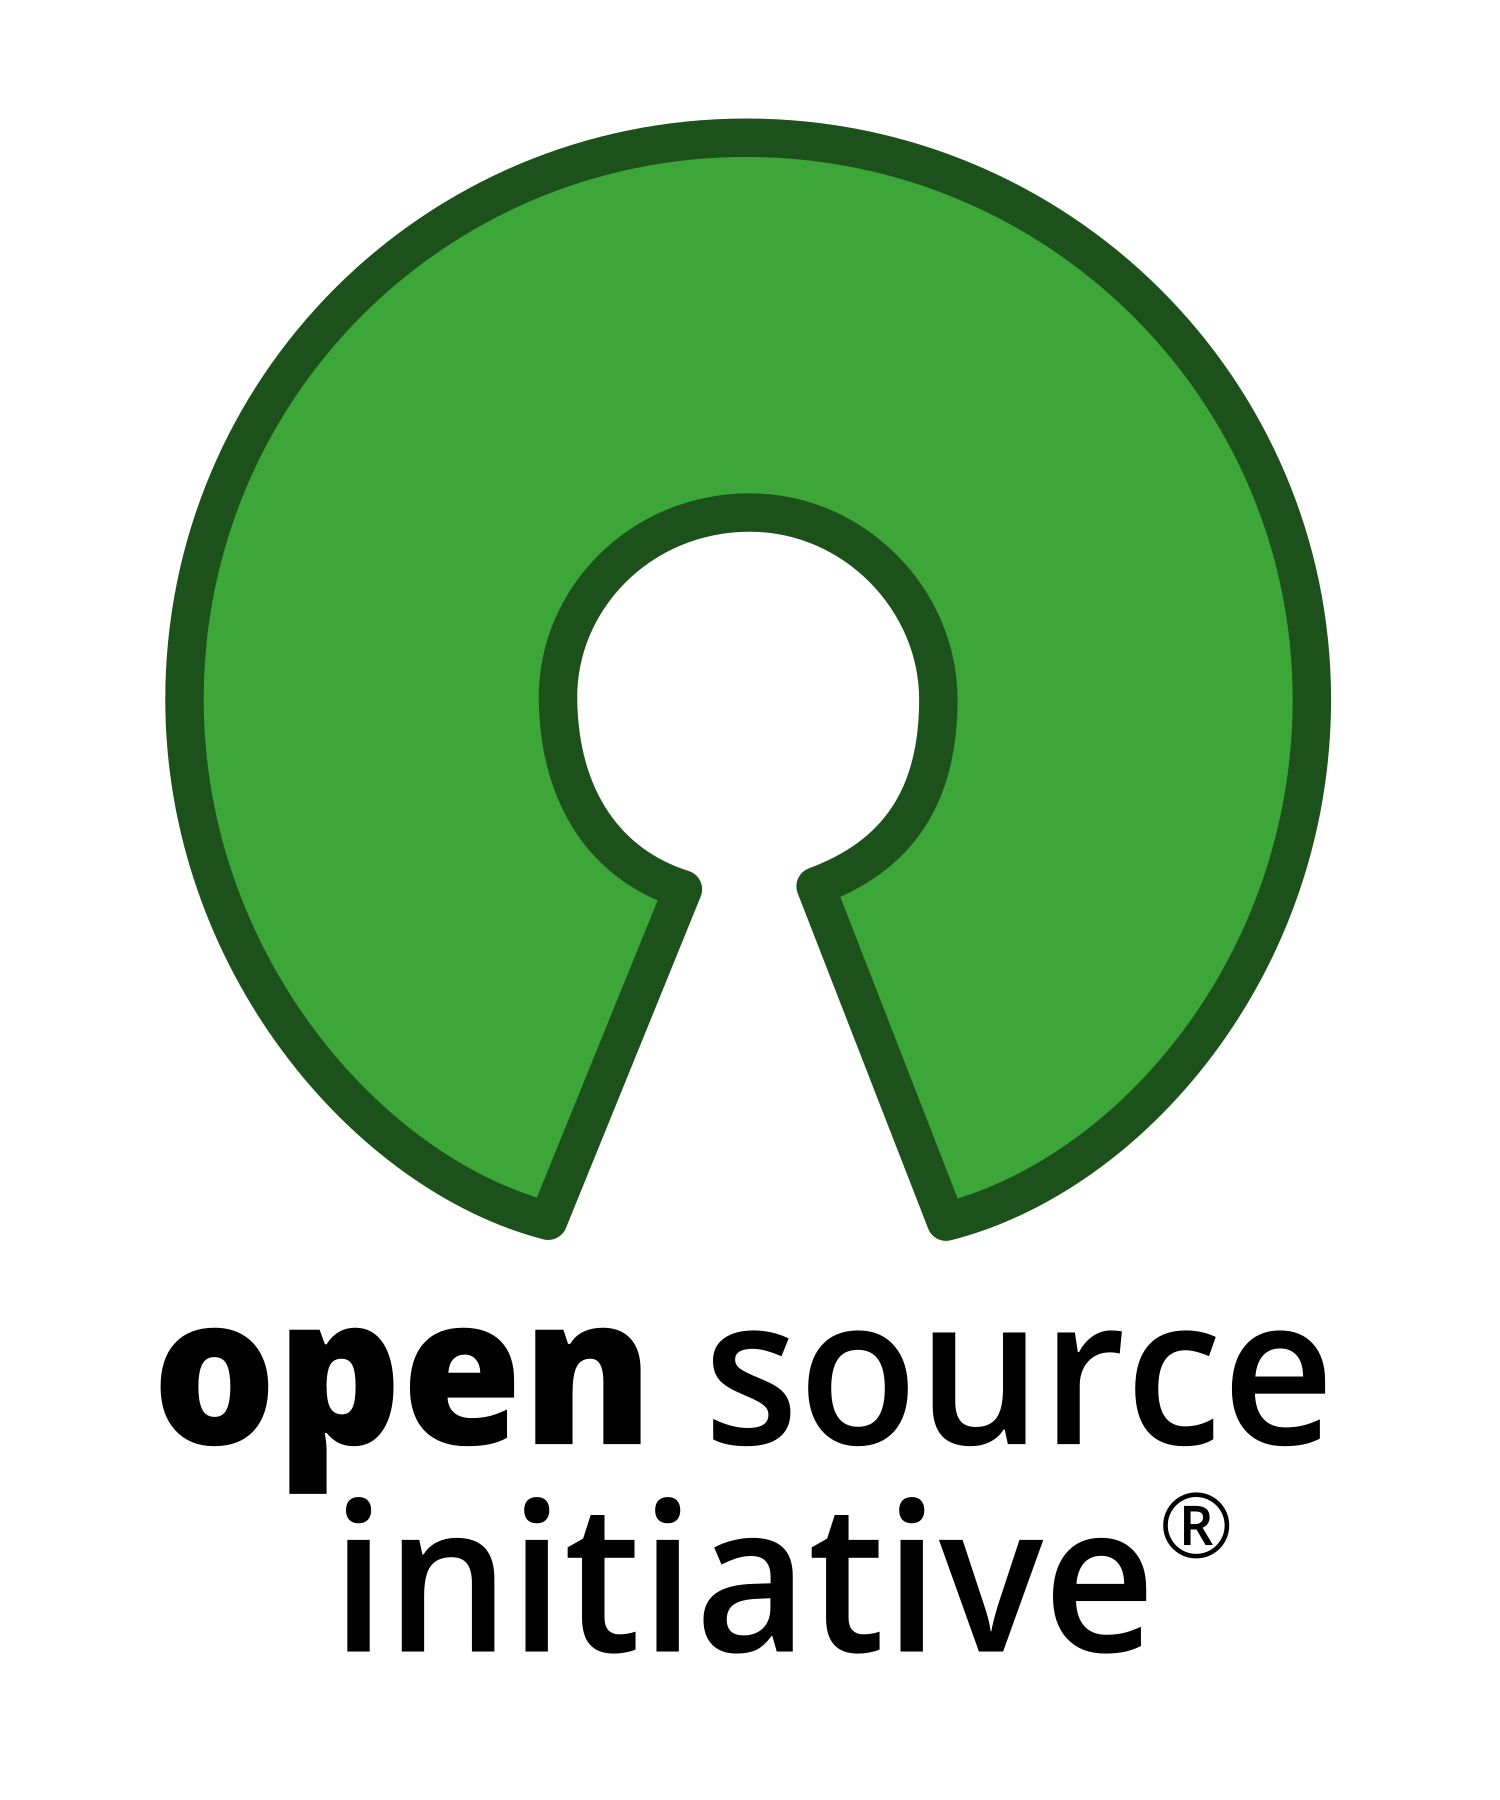 open source initiative logo